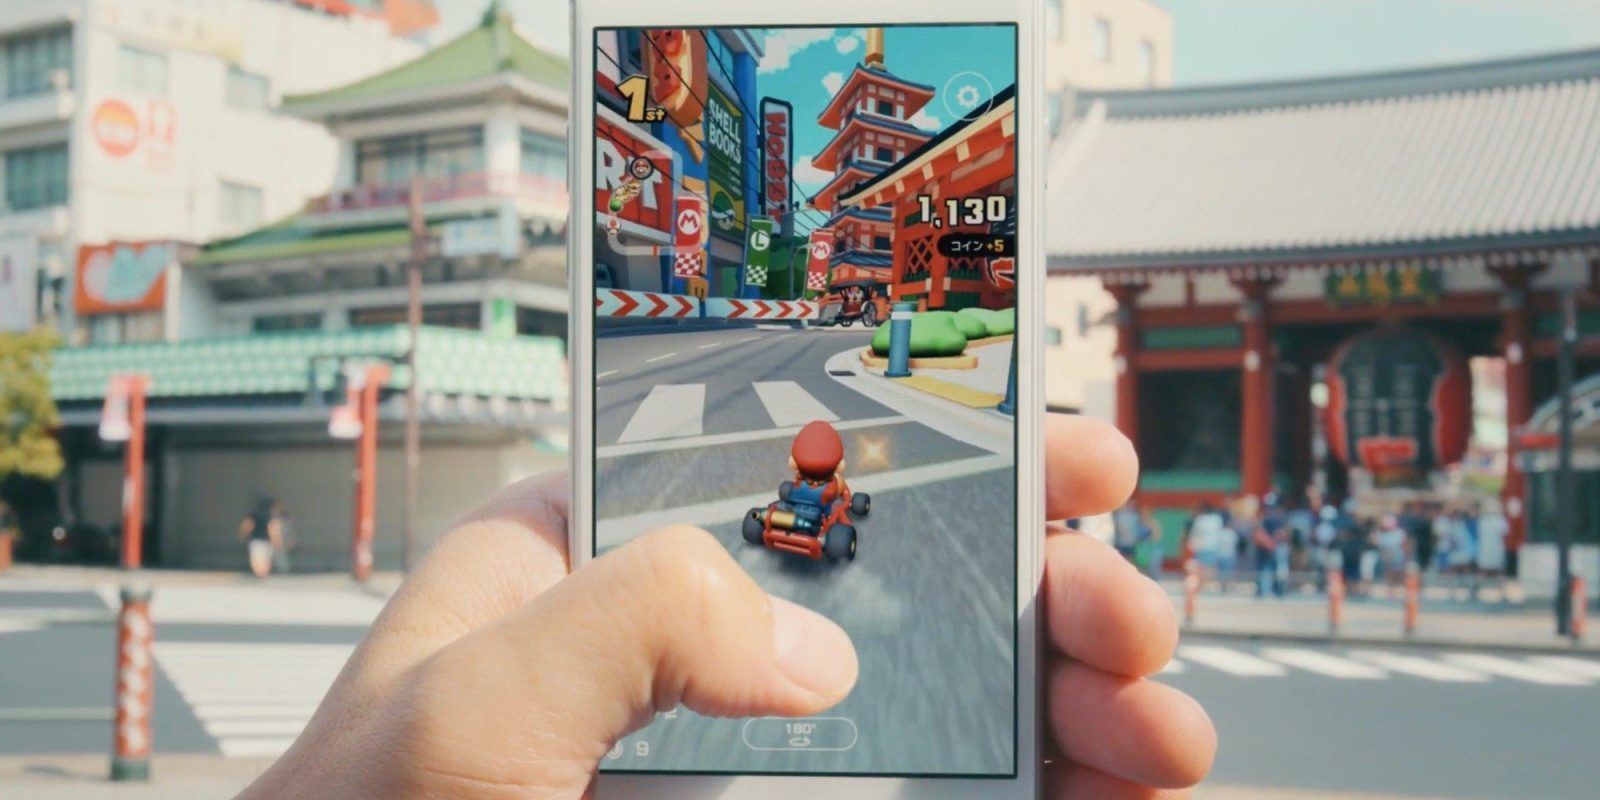 Mario Kart Tour ya se puede descargar en celulares Android e iOS, Doctor  Tecno, La Revista